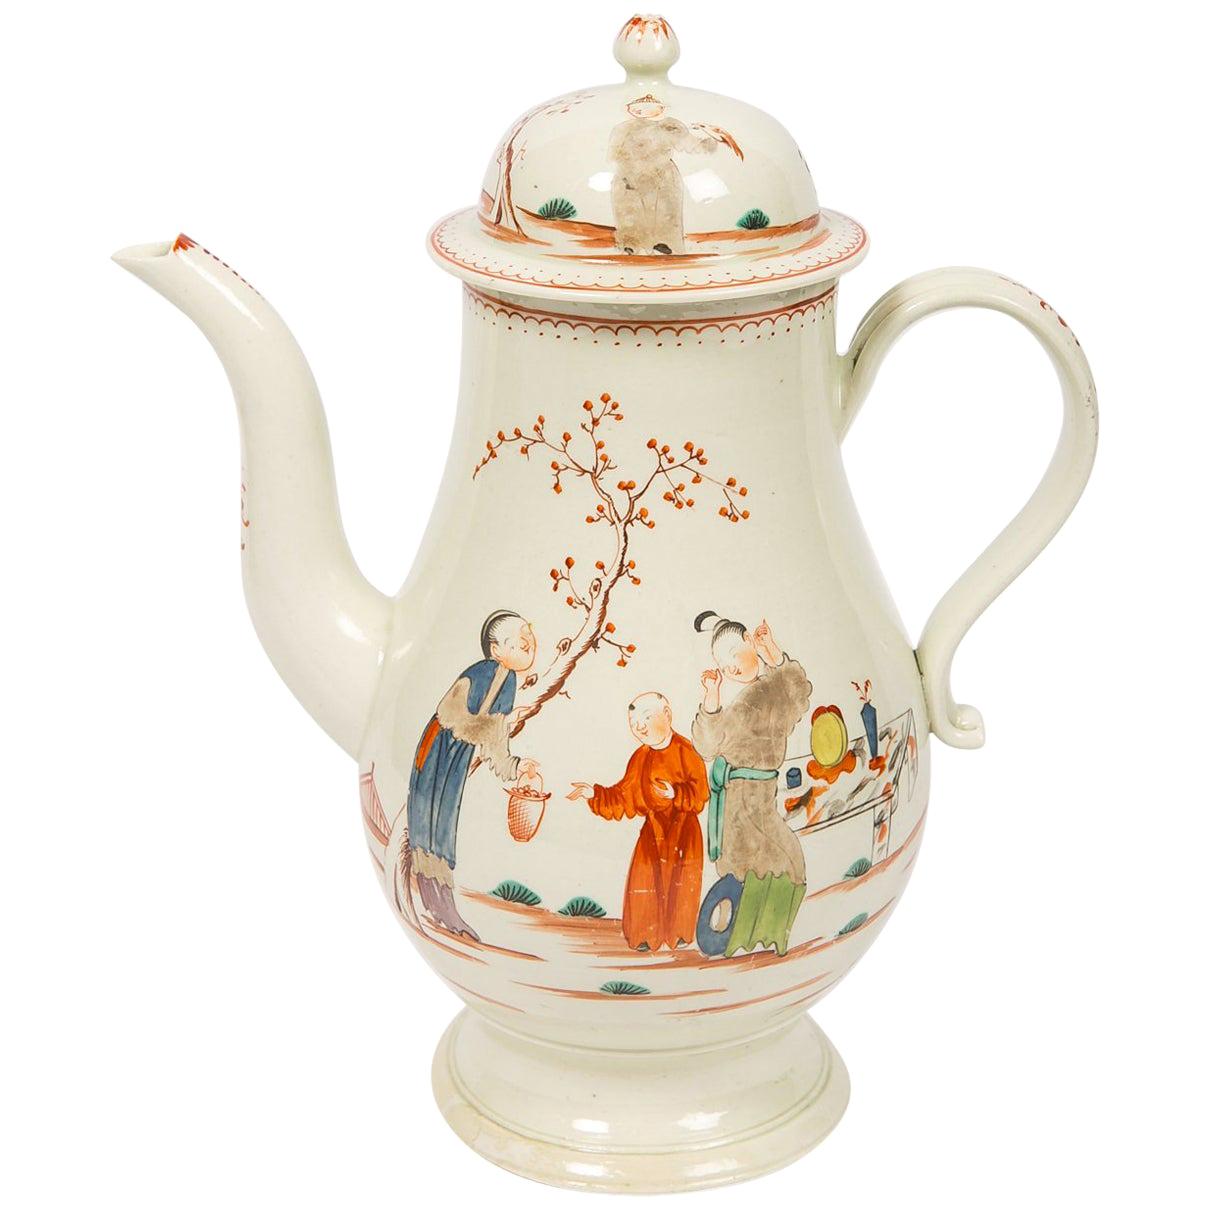 Antique English Soft Paste Porcelain Liverpool Coffee Pot, 18th Century